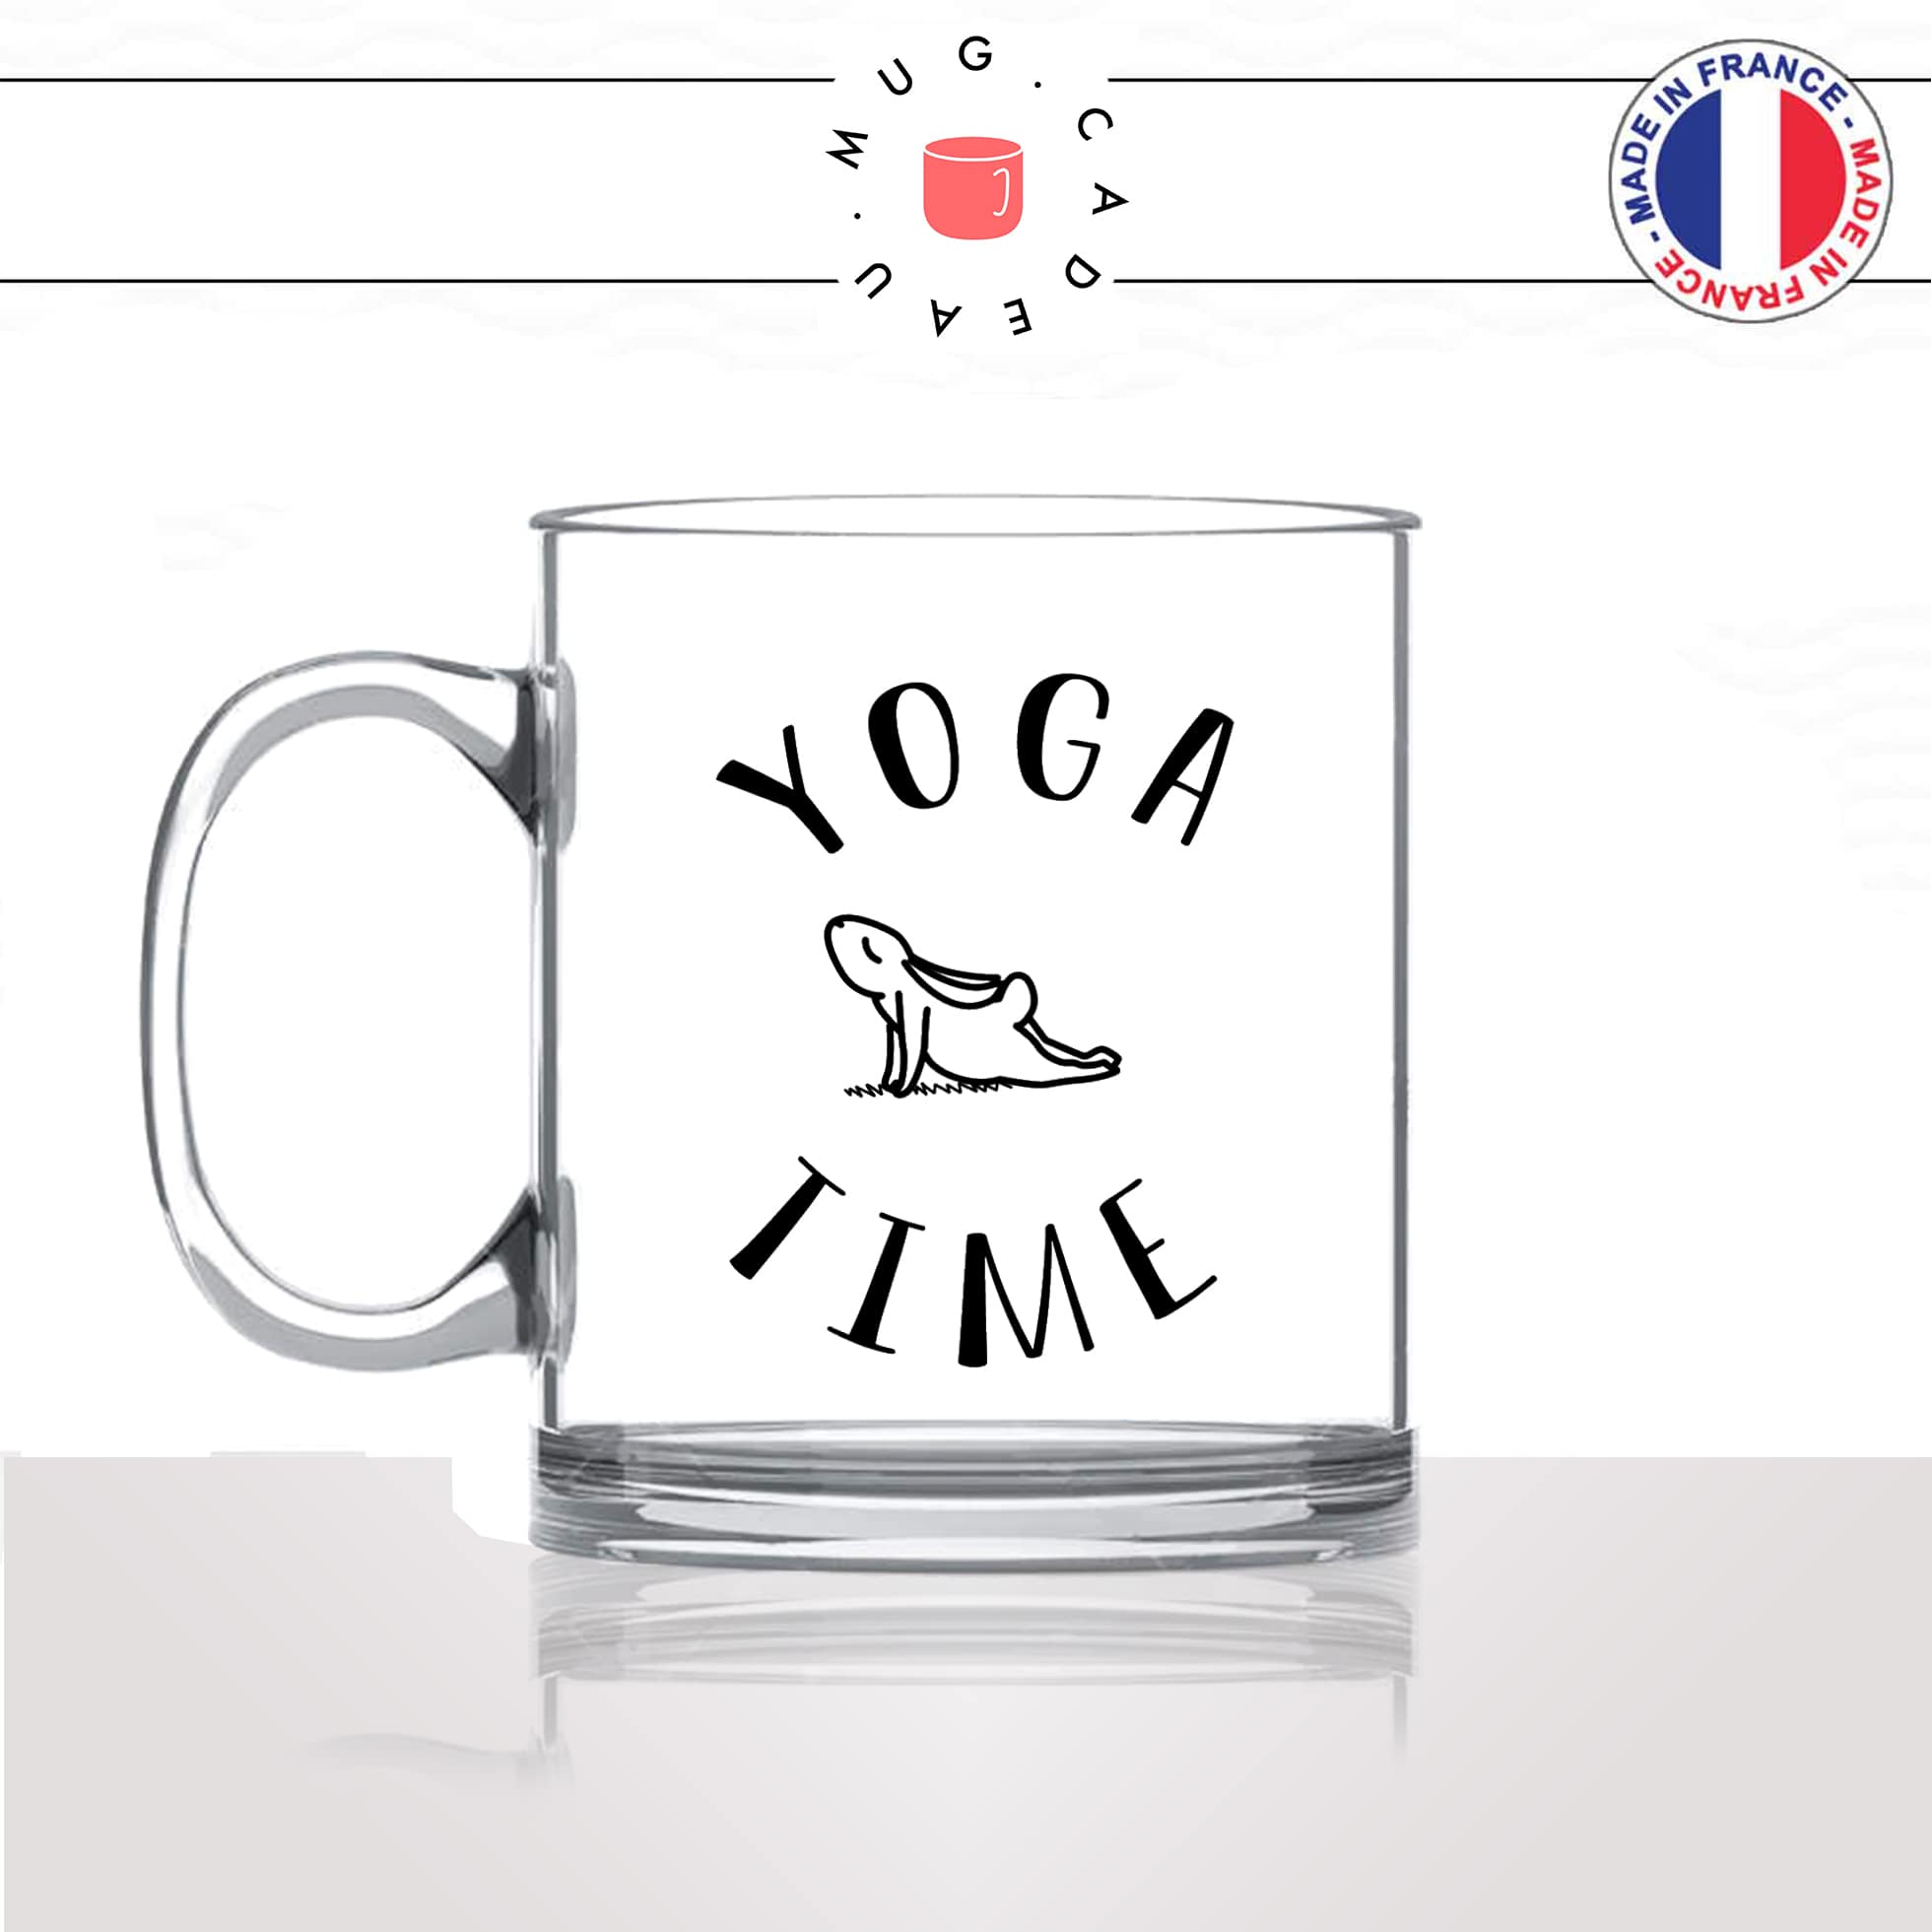 tasse-mug-en-verre-transparent-lapin-pose-yoga-time-sport-pilate-meditation-mignon-animal-noir-fun-café-thé-idée-cadeau-original-personnalisé-min